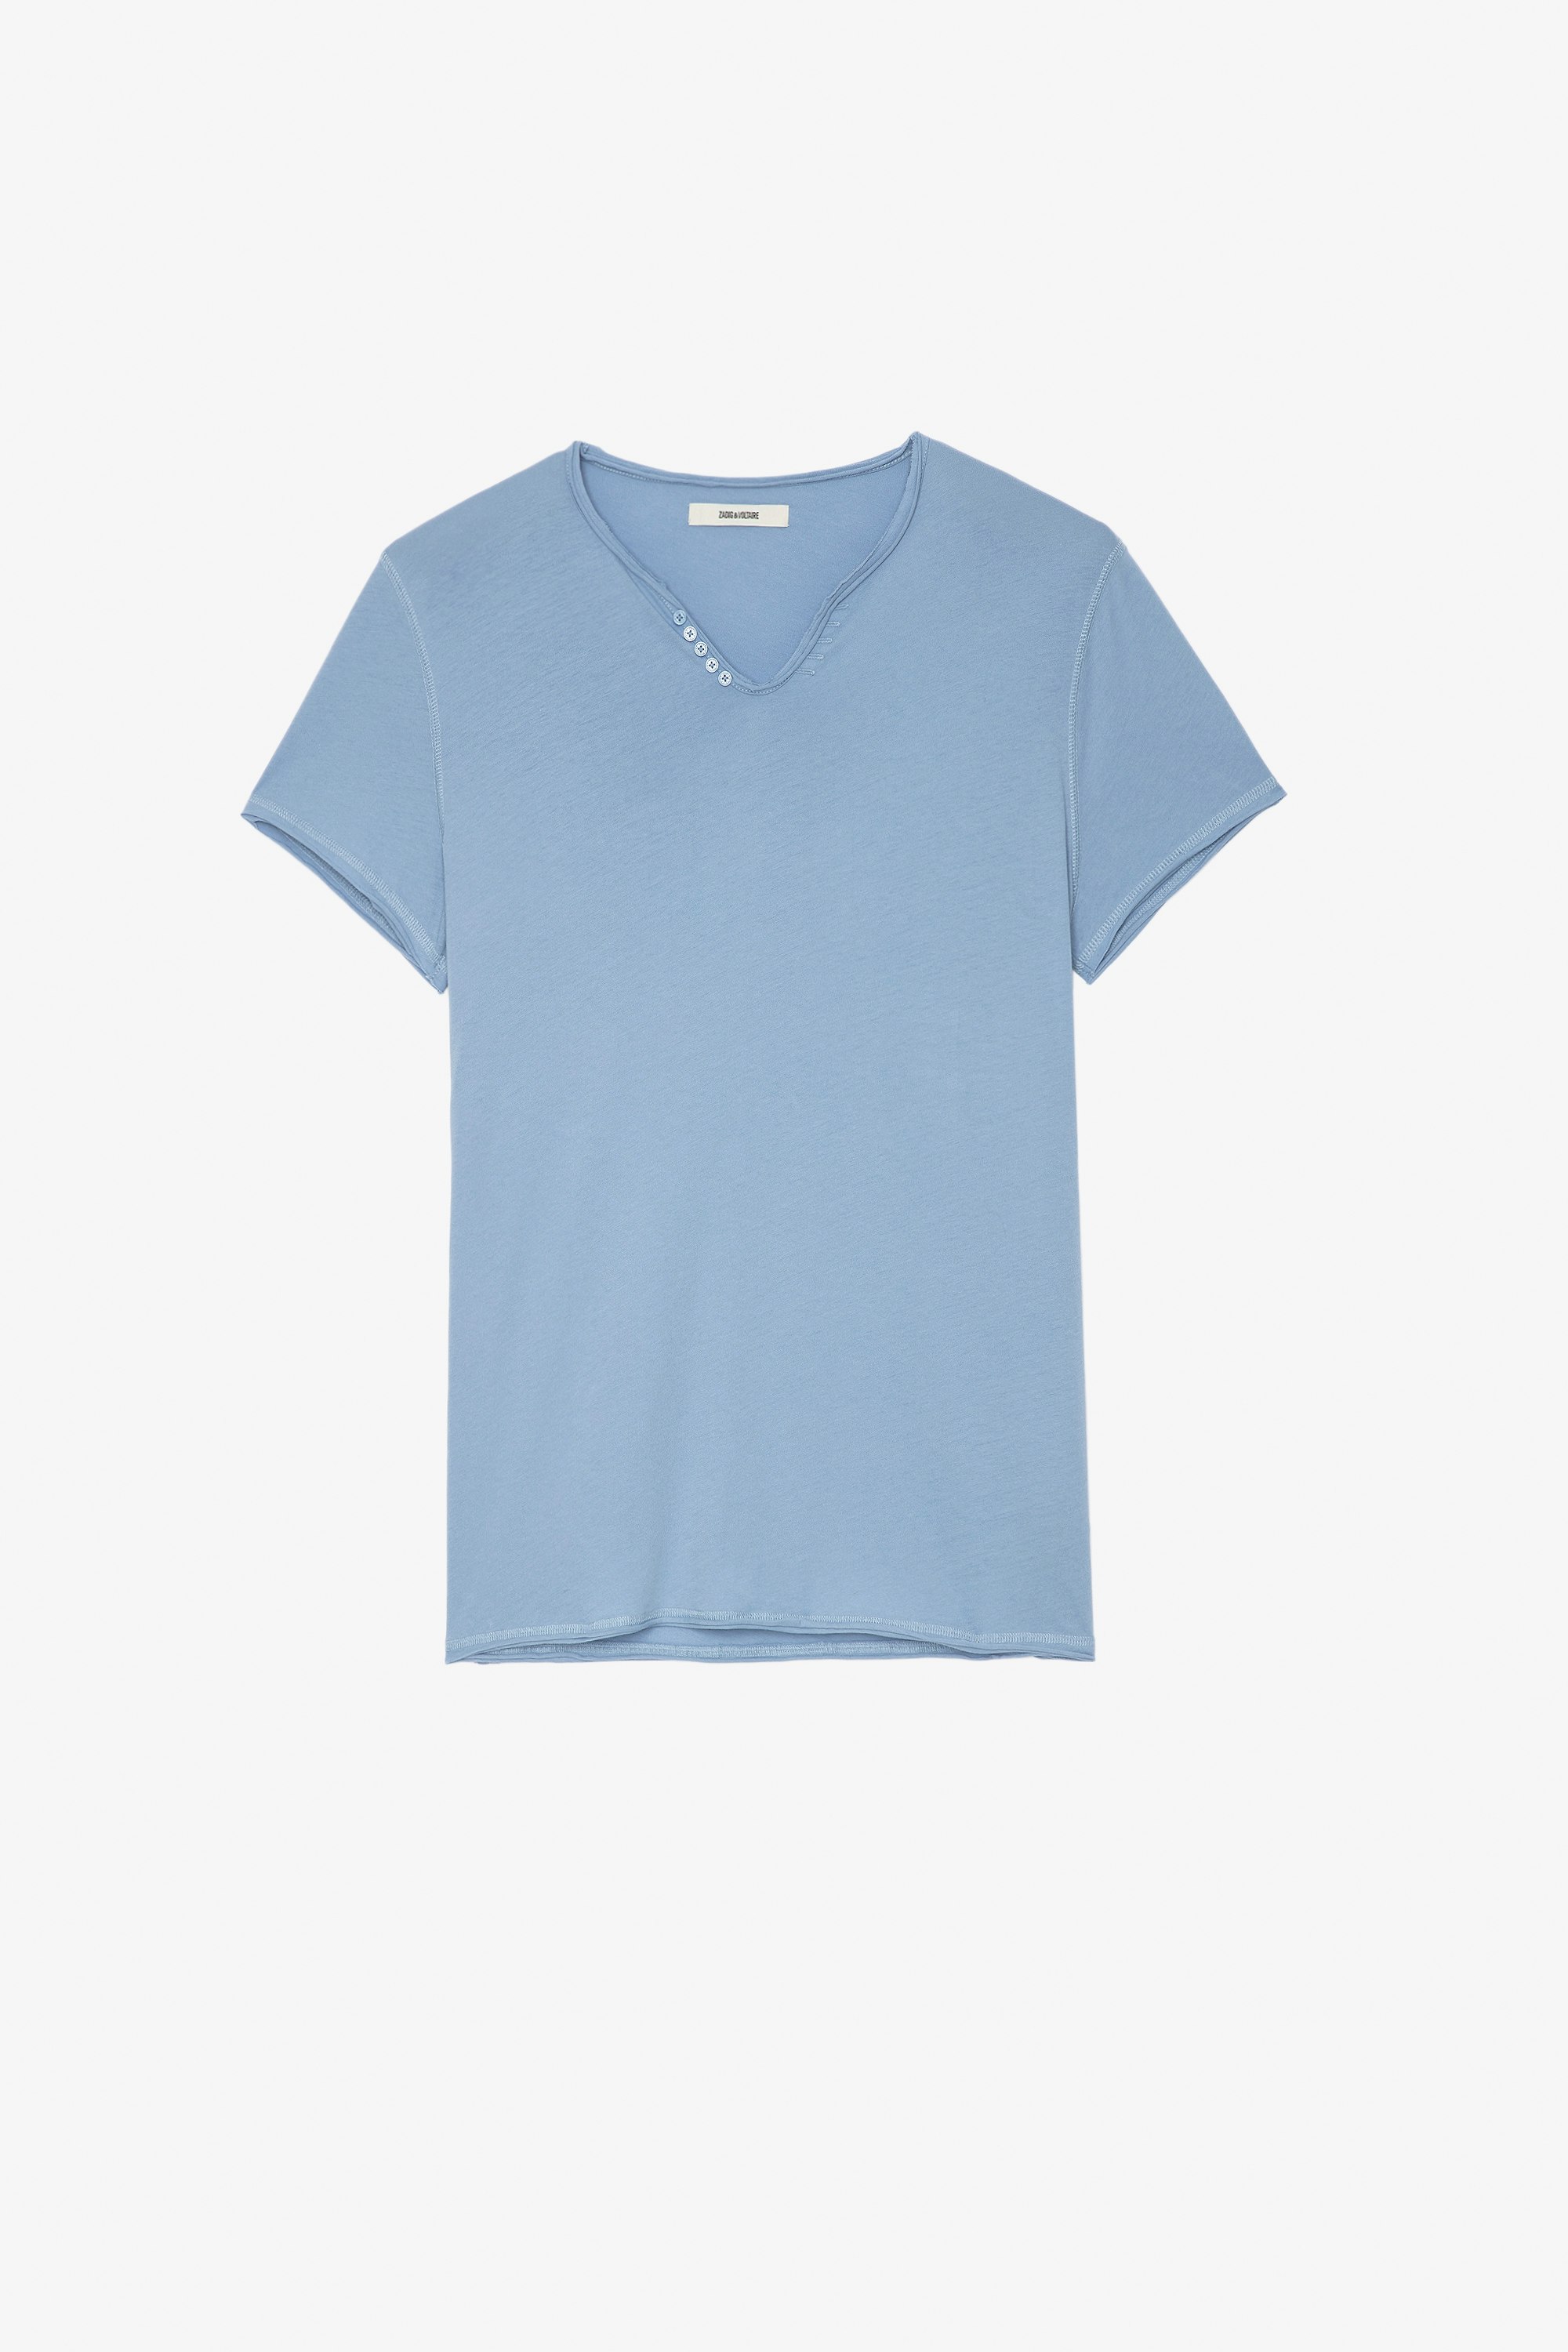 Monastir T-Shirt Men's blue cotton T-shirt with Henley neckline